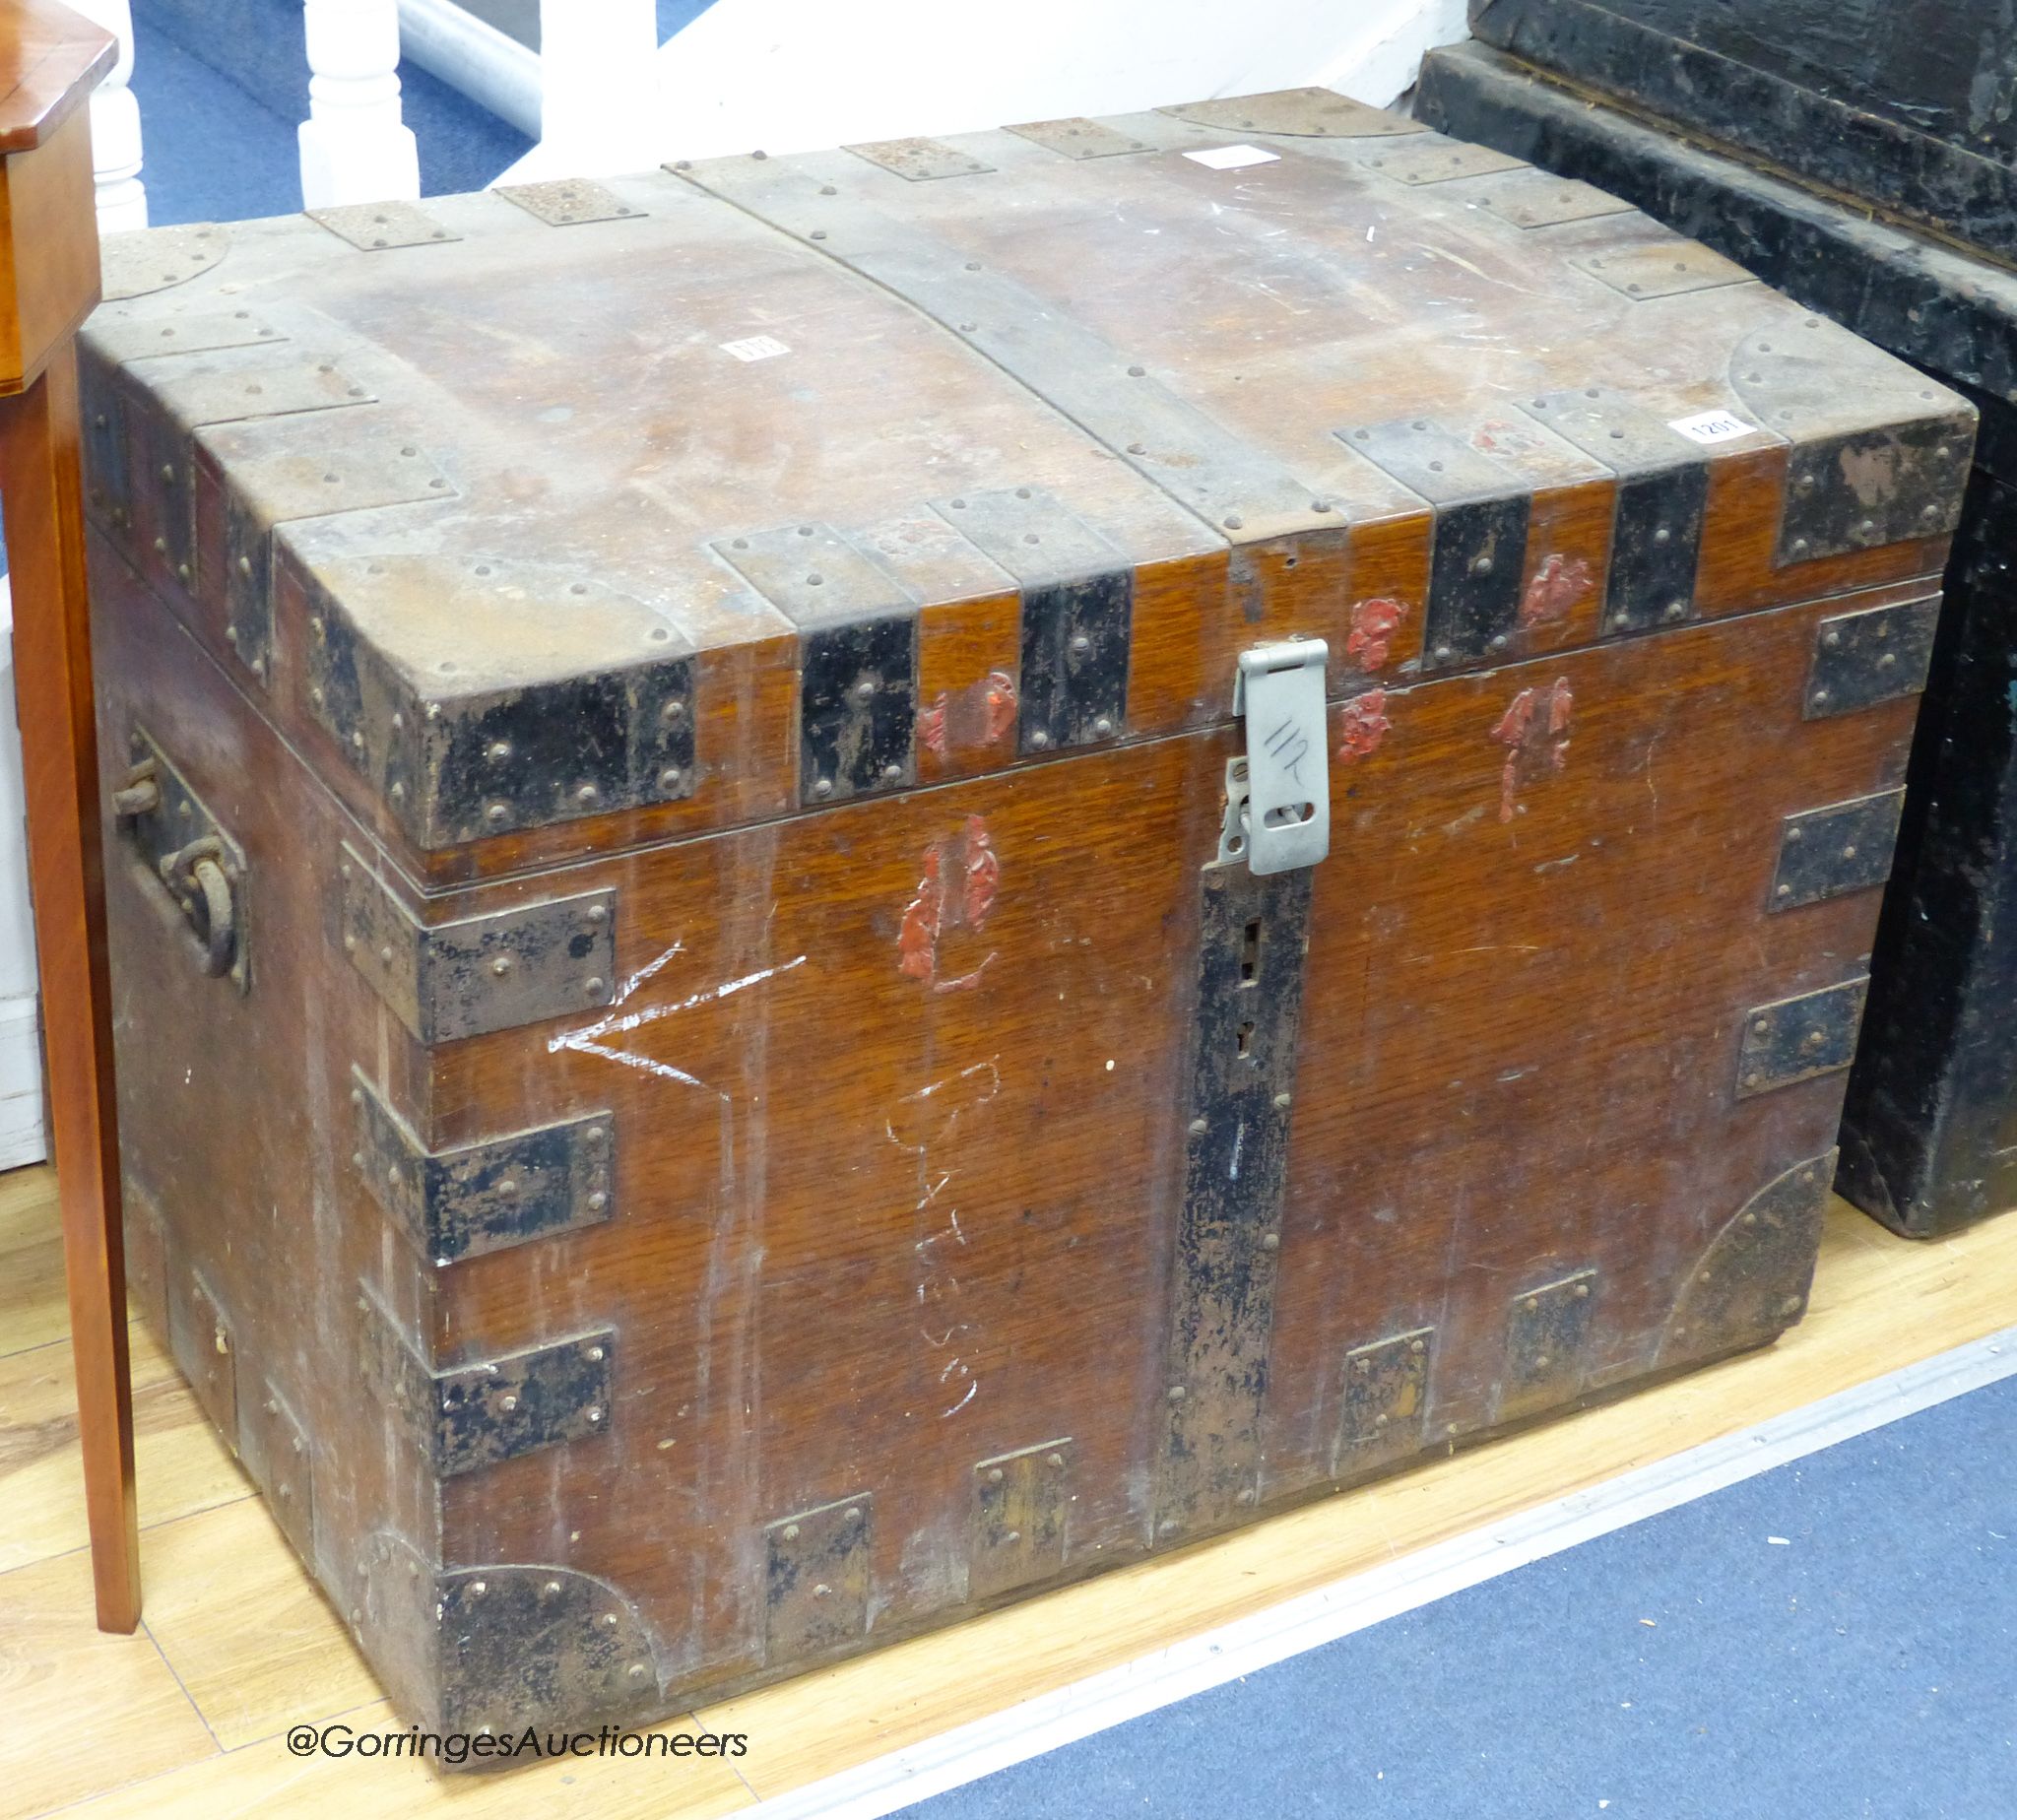 A Victorian iron bound oak silver chest. W-75, D-53, H-52cm.